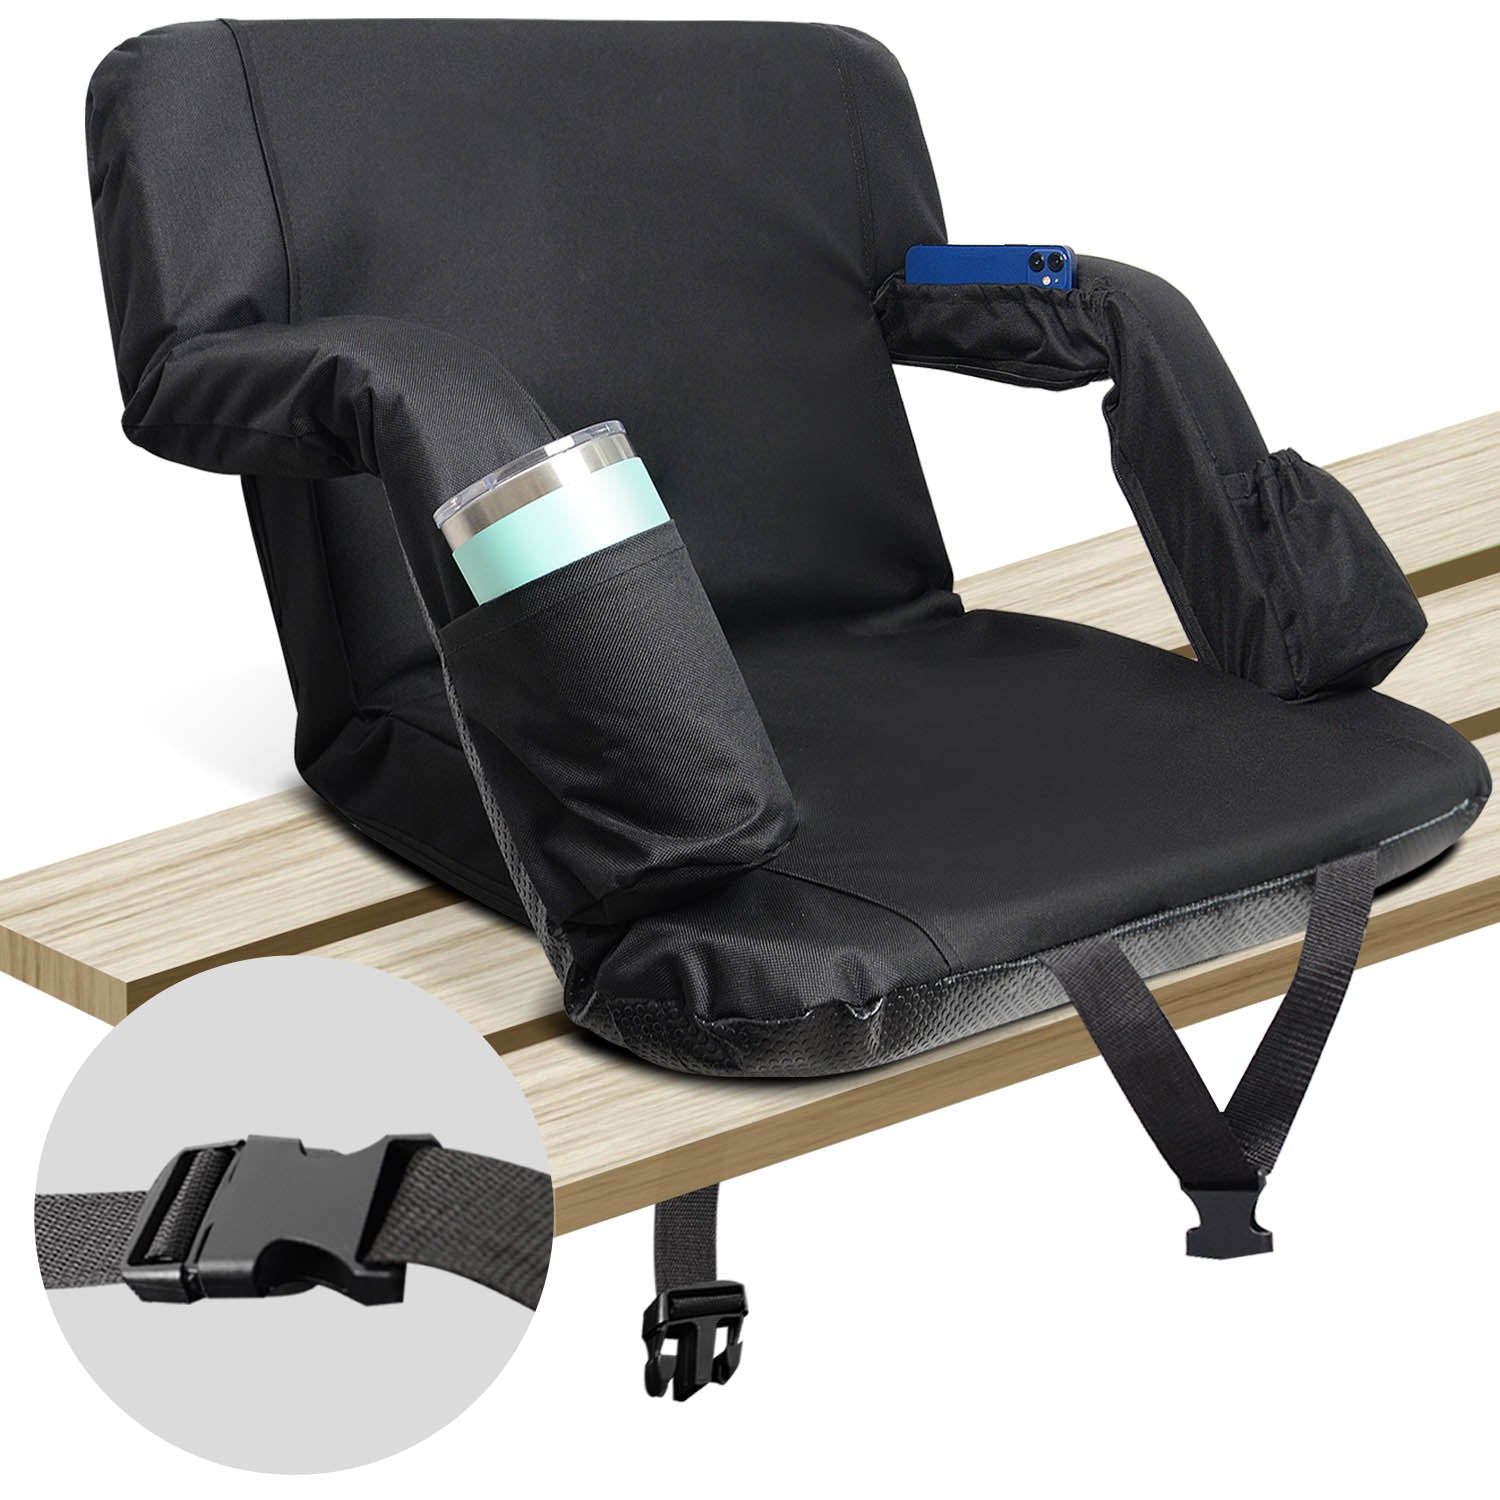 Heated and Massaging Stadium Seat Cushion